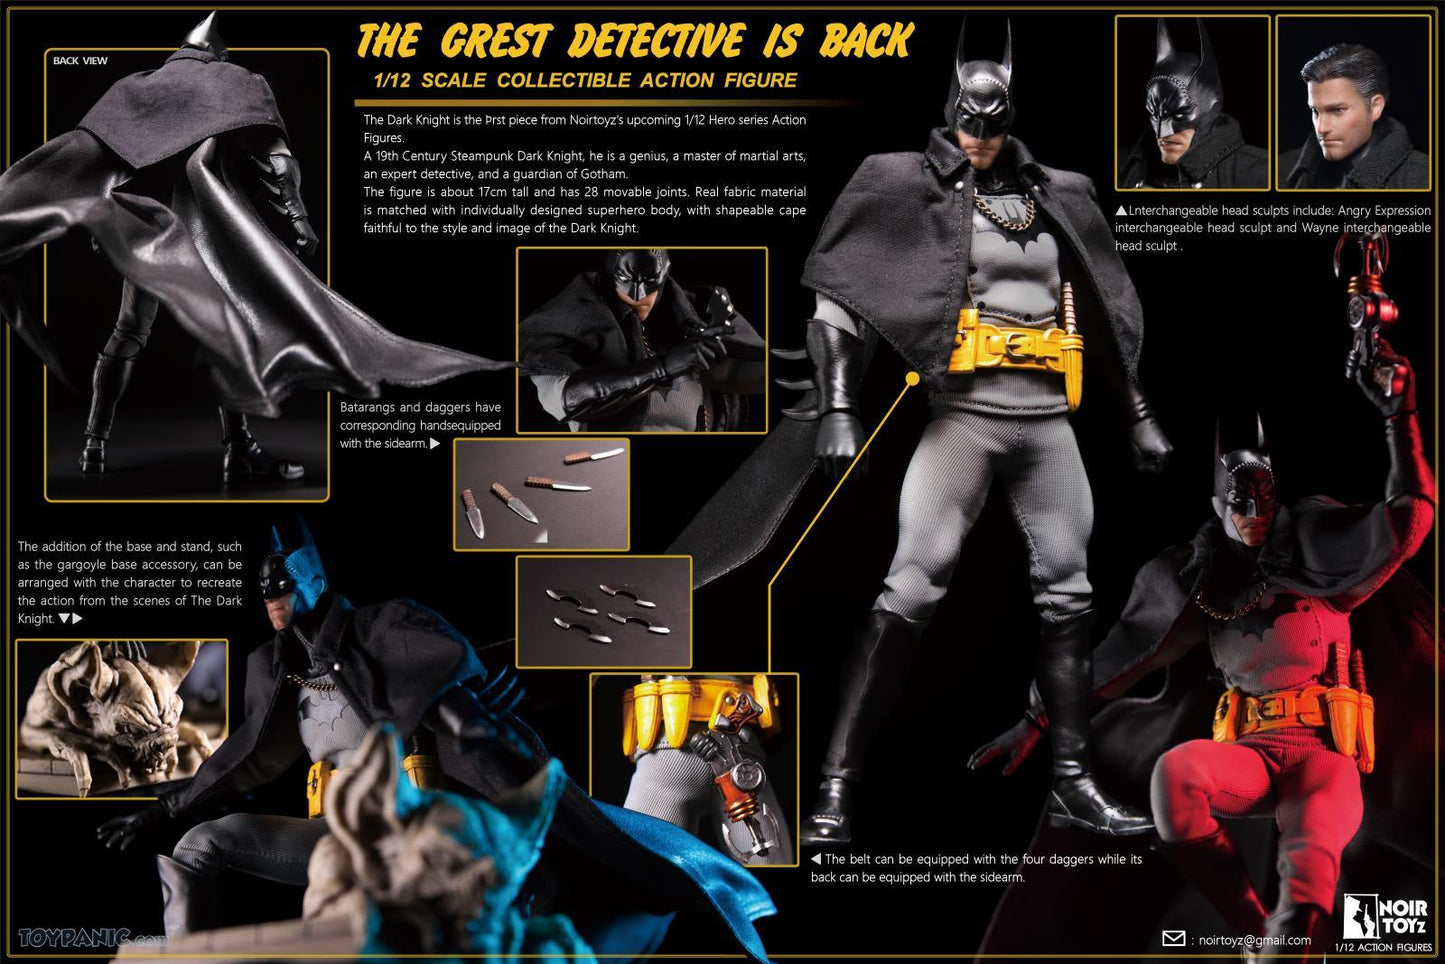 Noir Toyz 1/12 Hero Series 19th Century Dark Knight Batman Deluxe